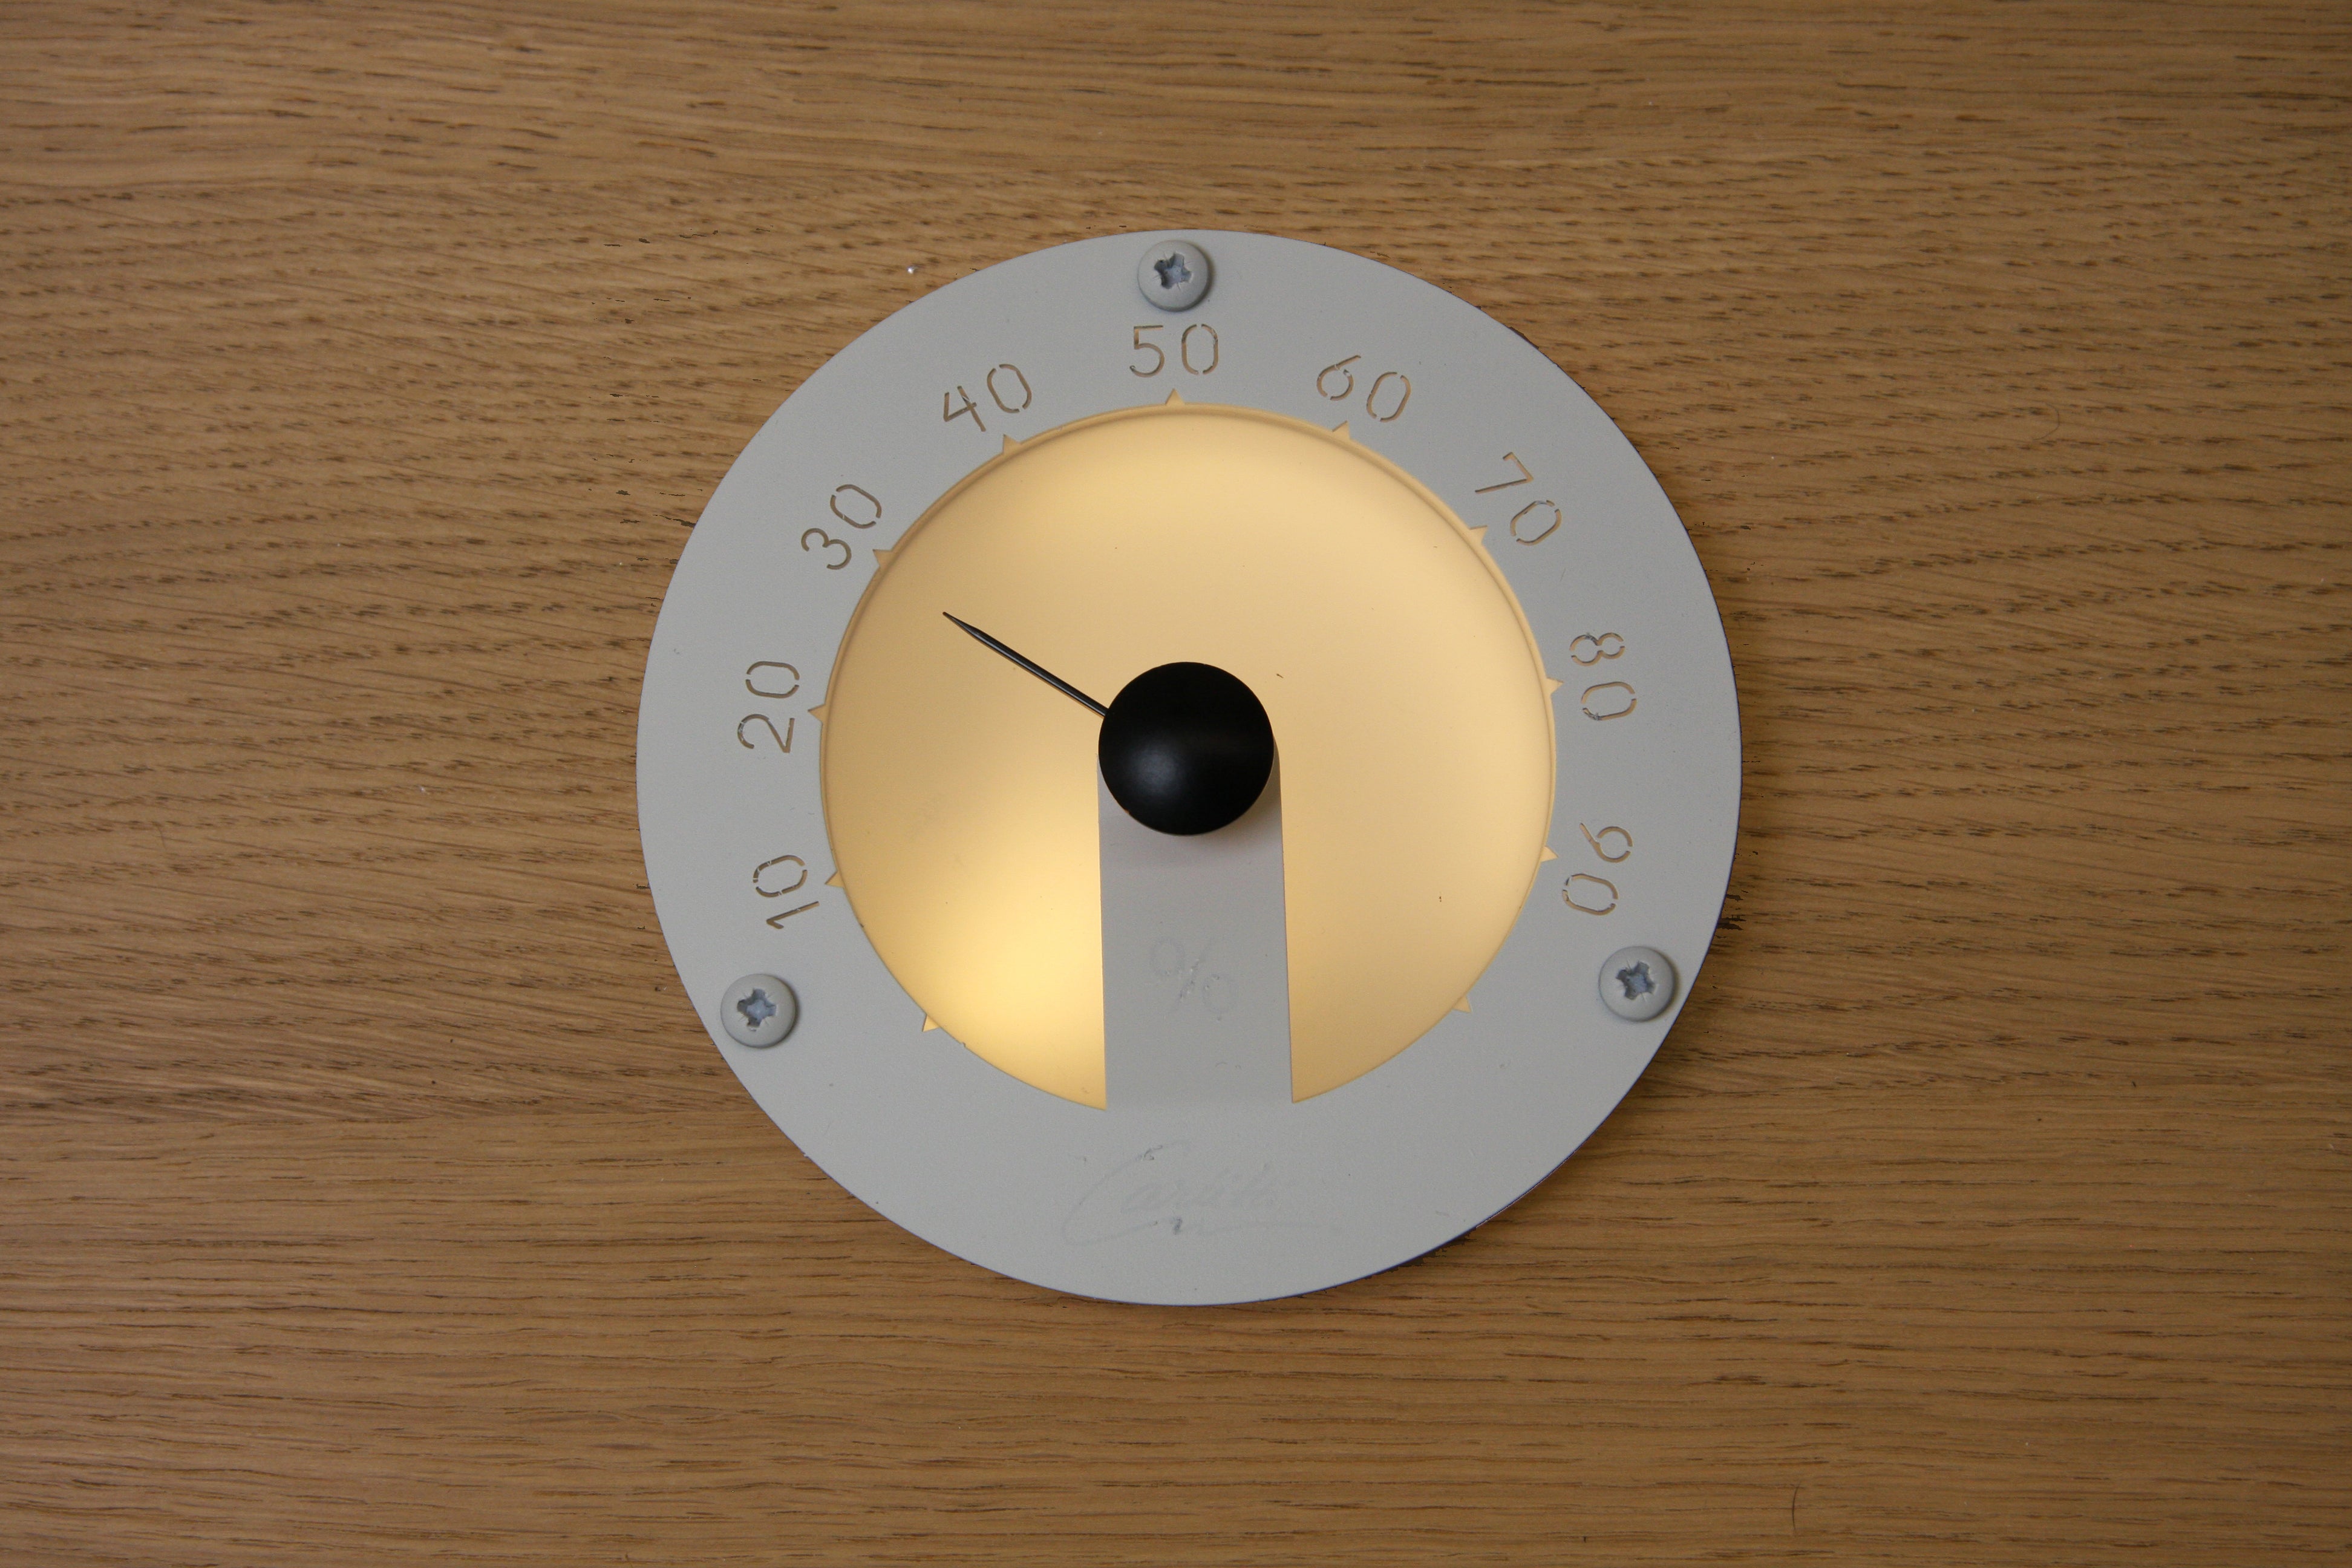 Cariitti Sauna Hygrometer Rond LED armatuur in Zwart, Wit of RVS